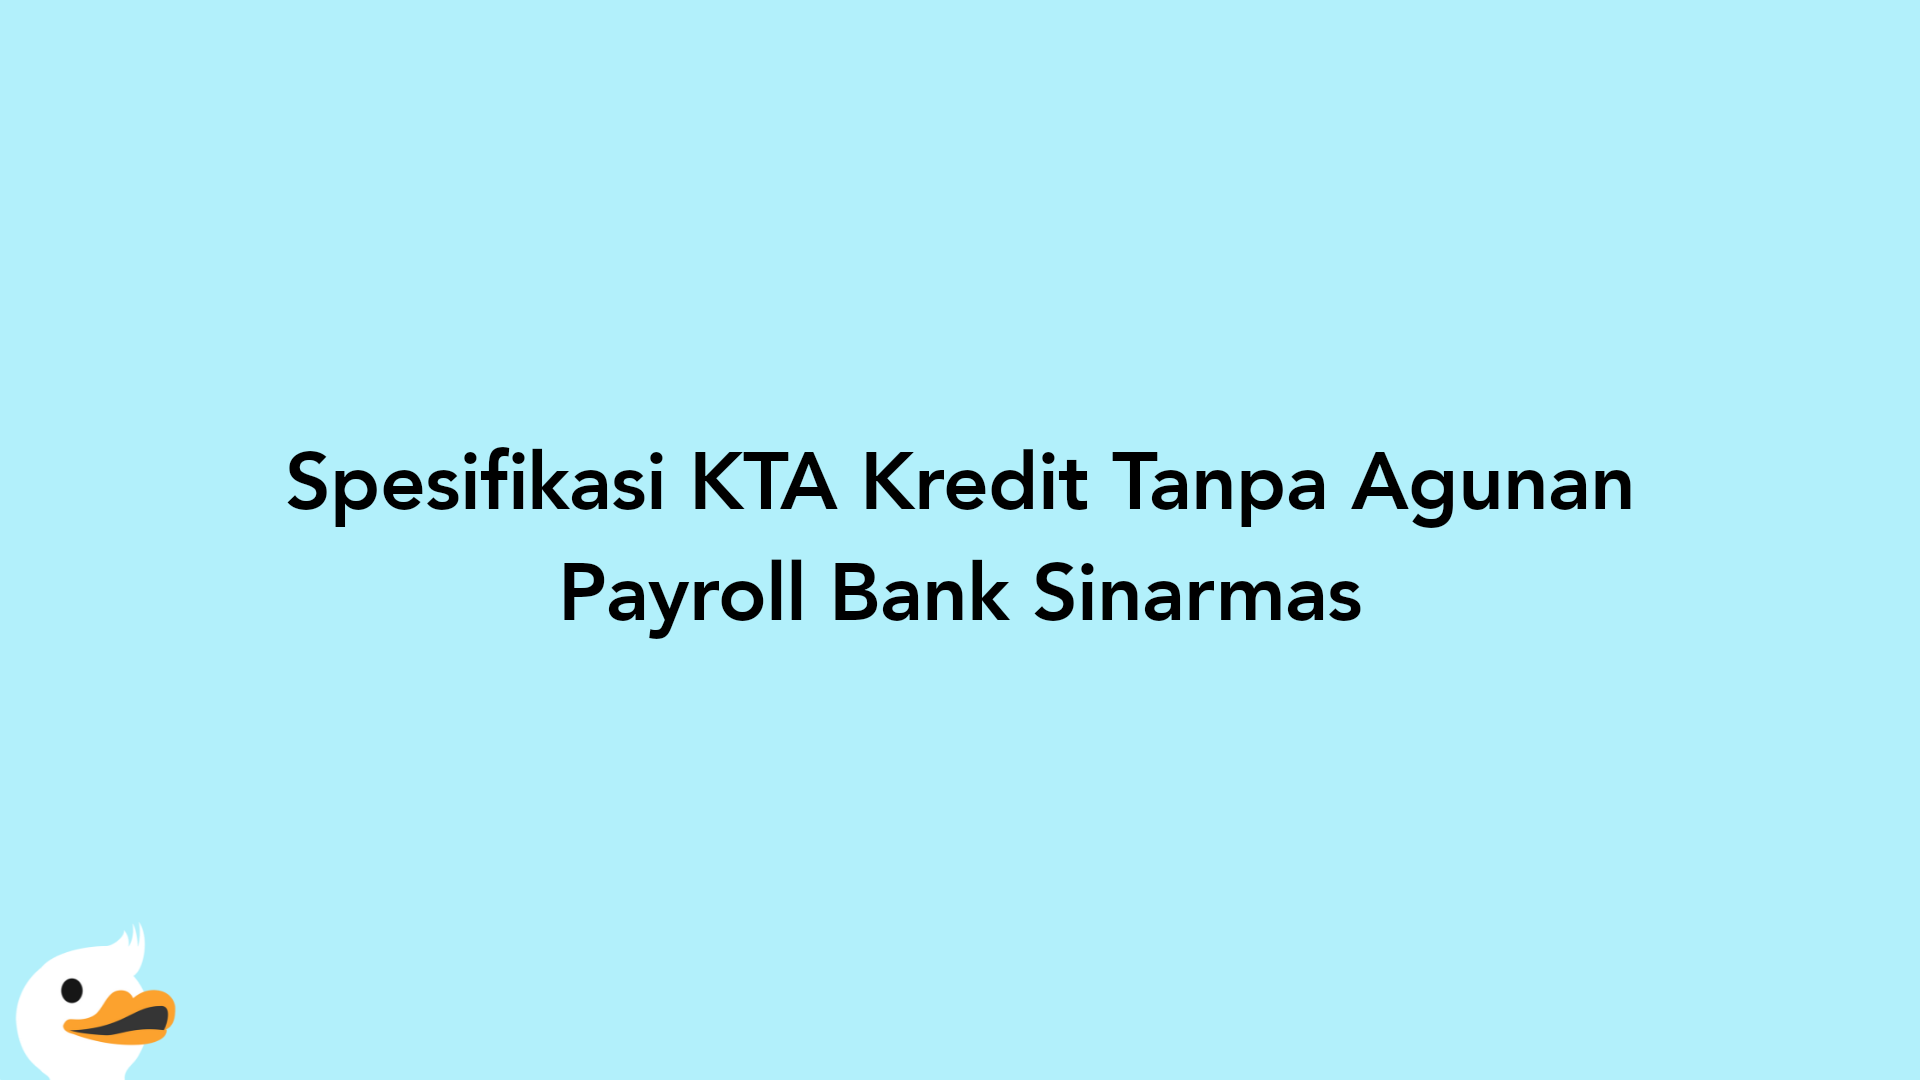 Spesifikasi KTA Kredit Tanpa Agunan Payroll Bank Sinarmas